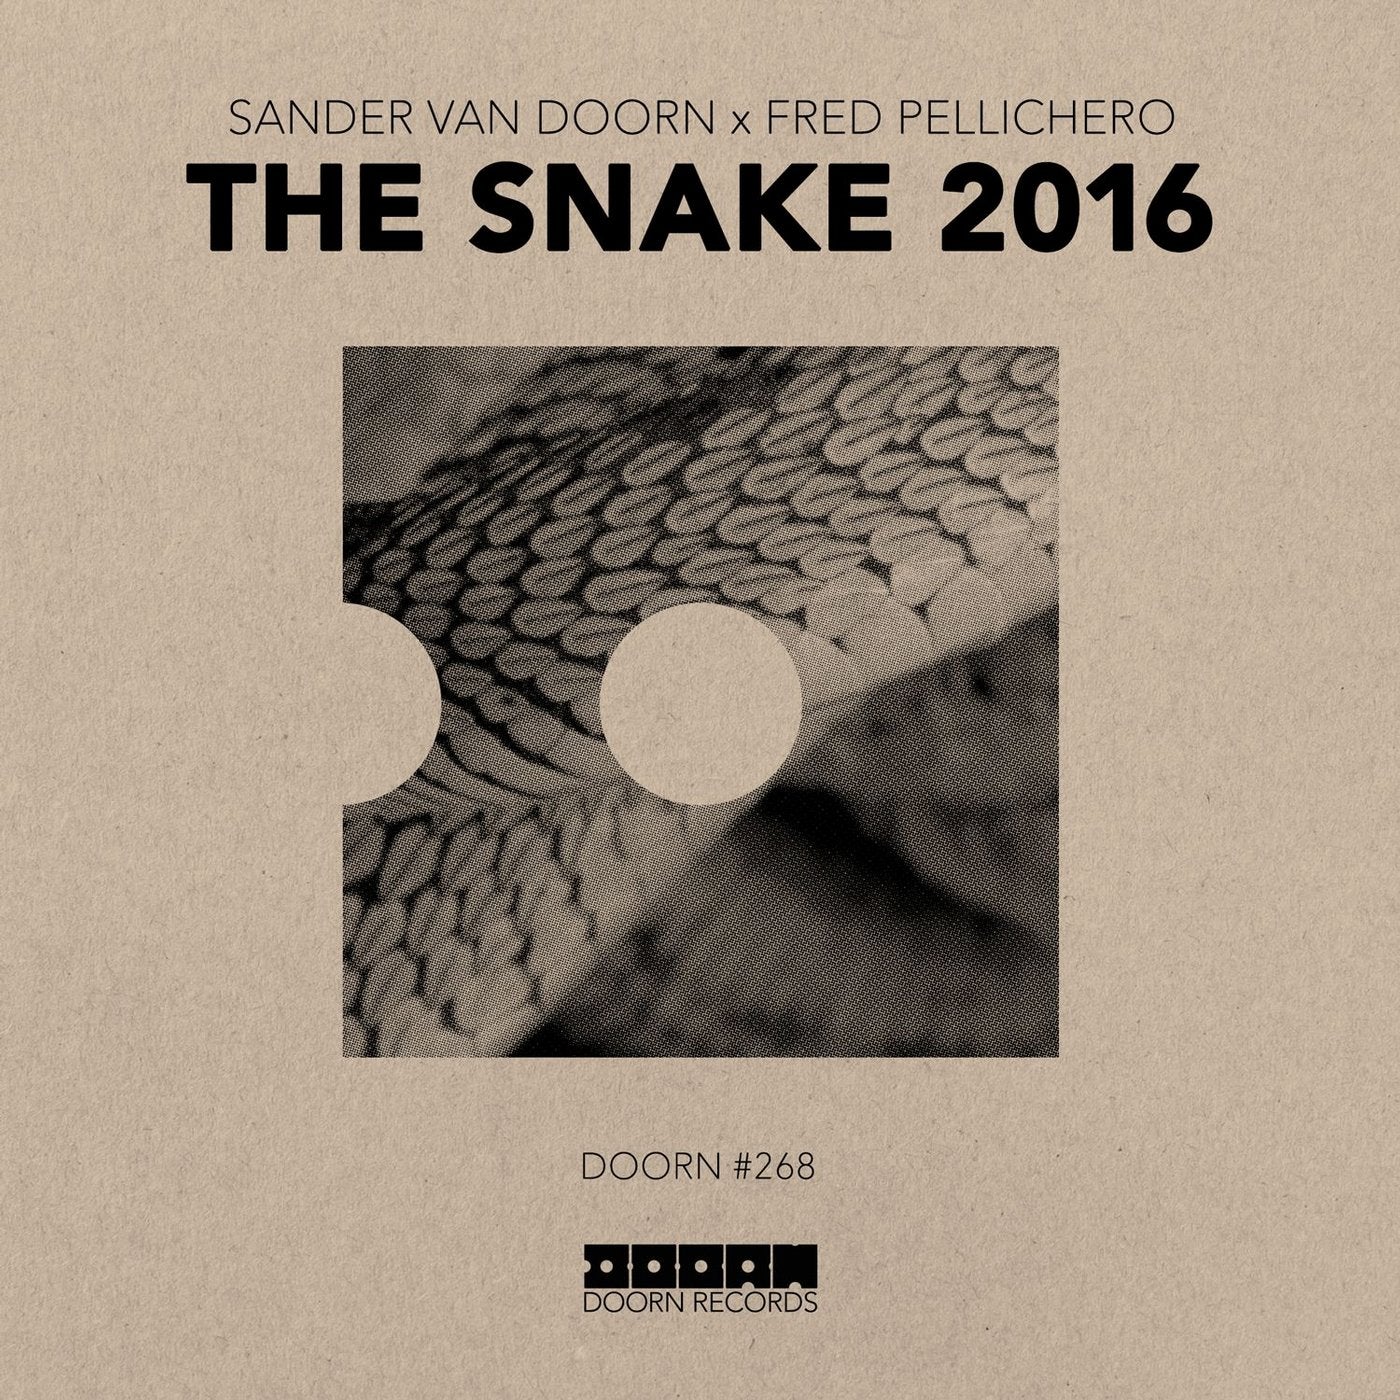 The Snake 2016